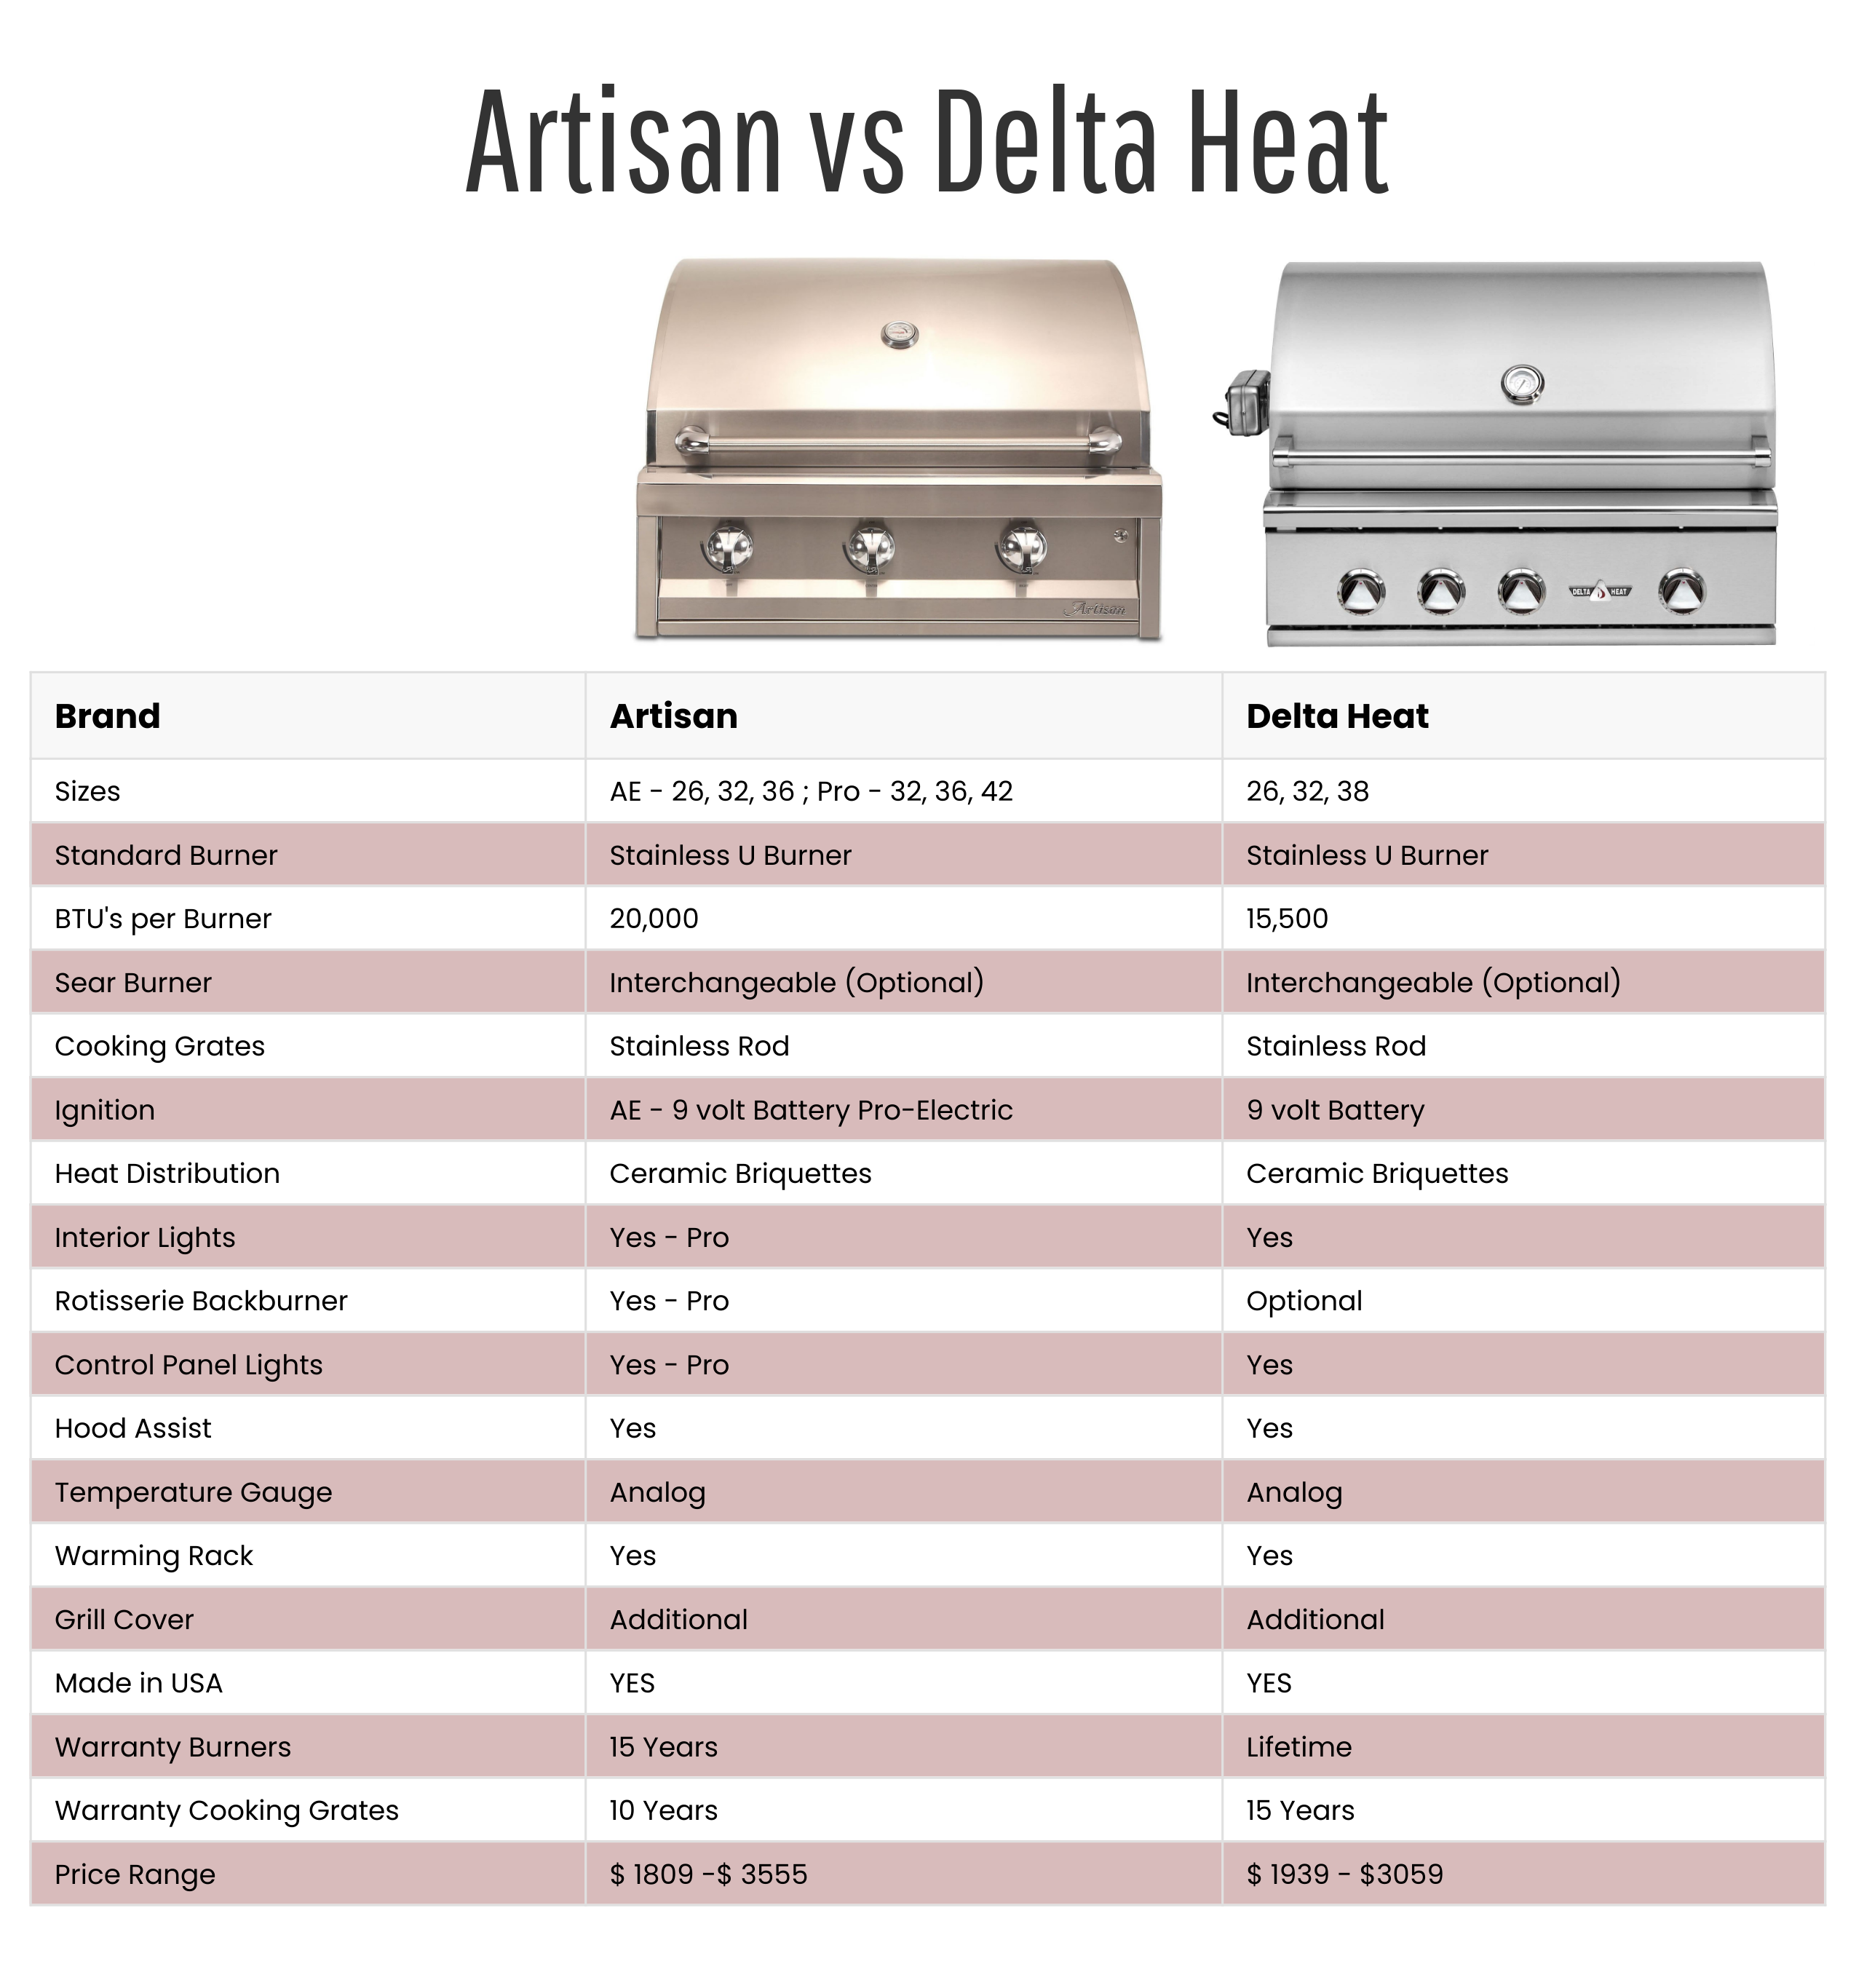 Artisan vs Delta Heat